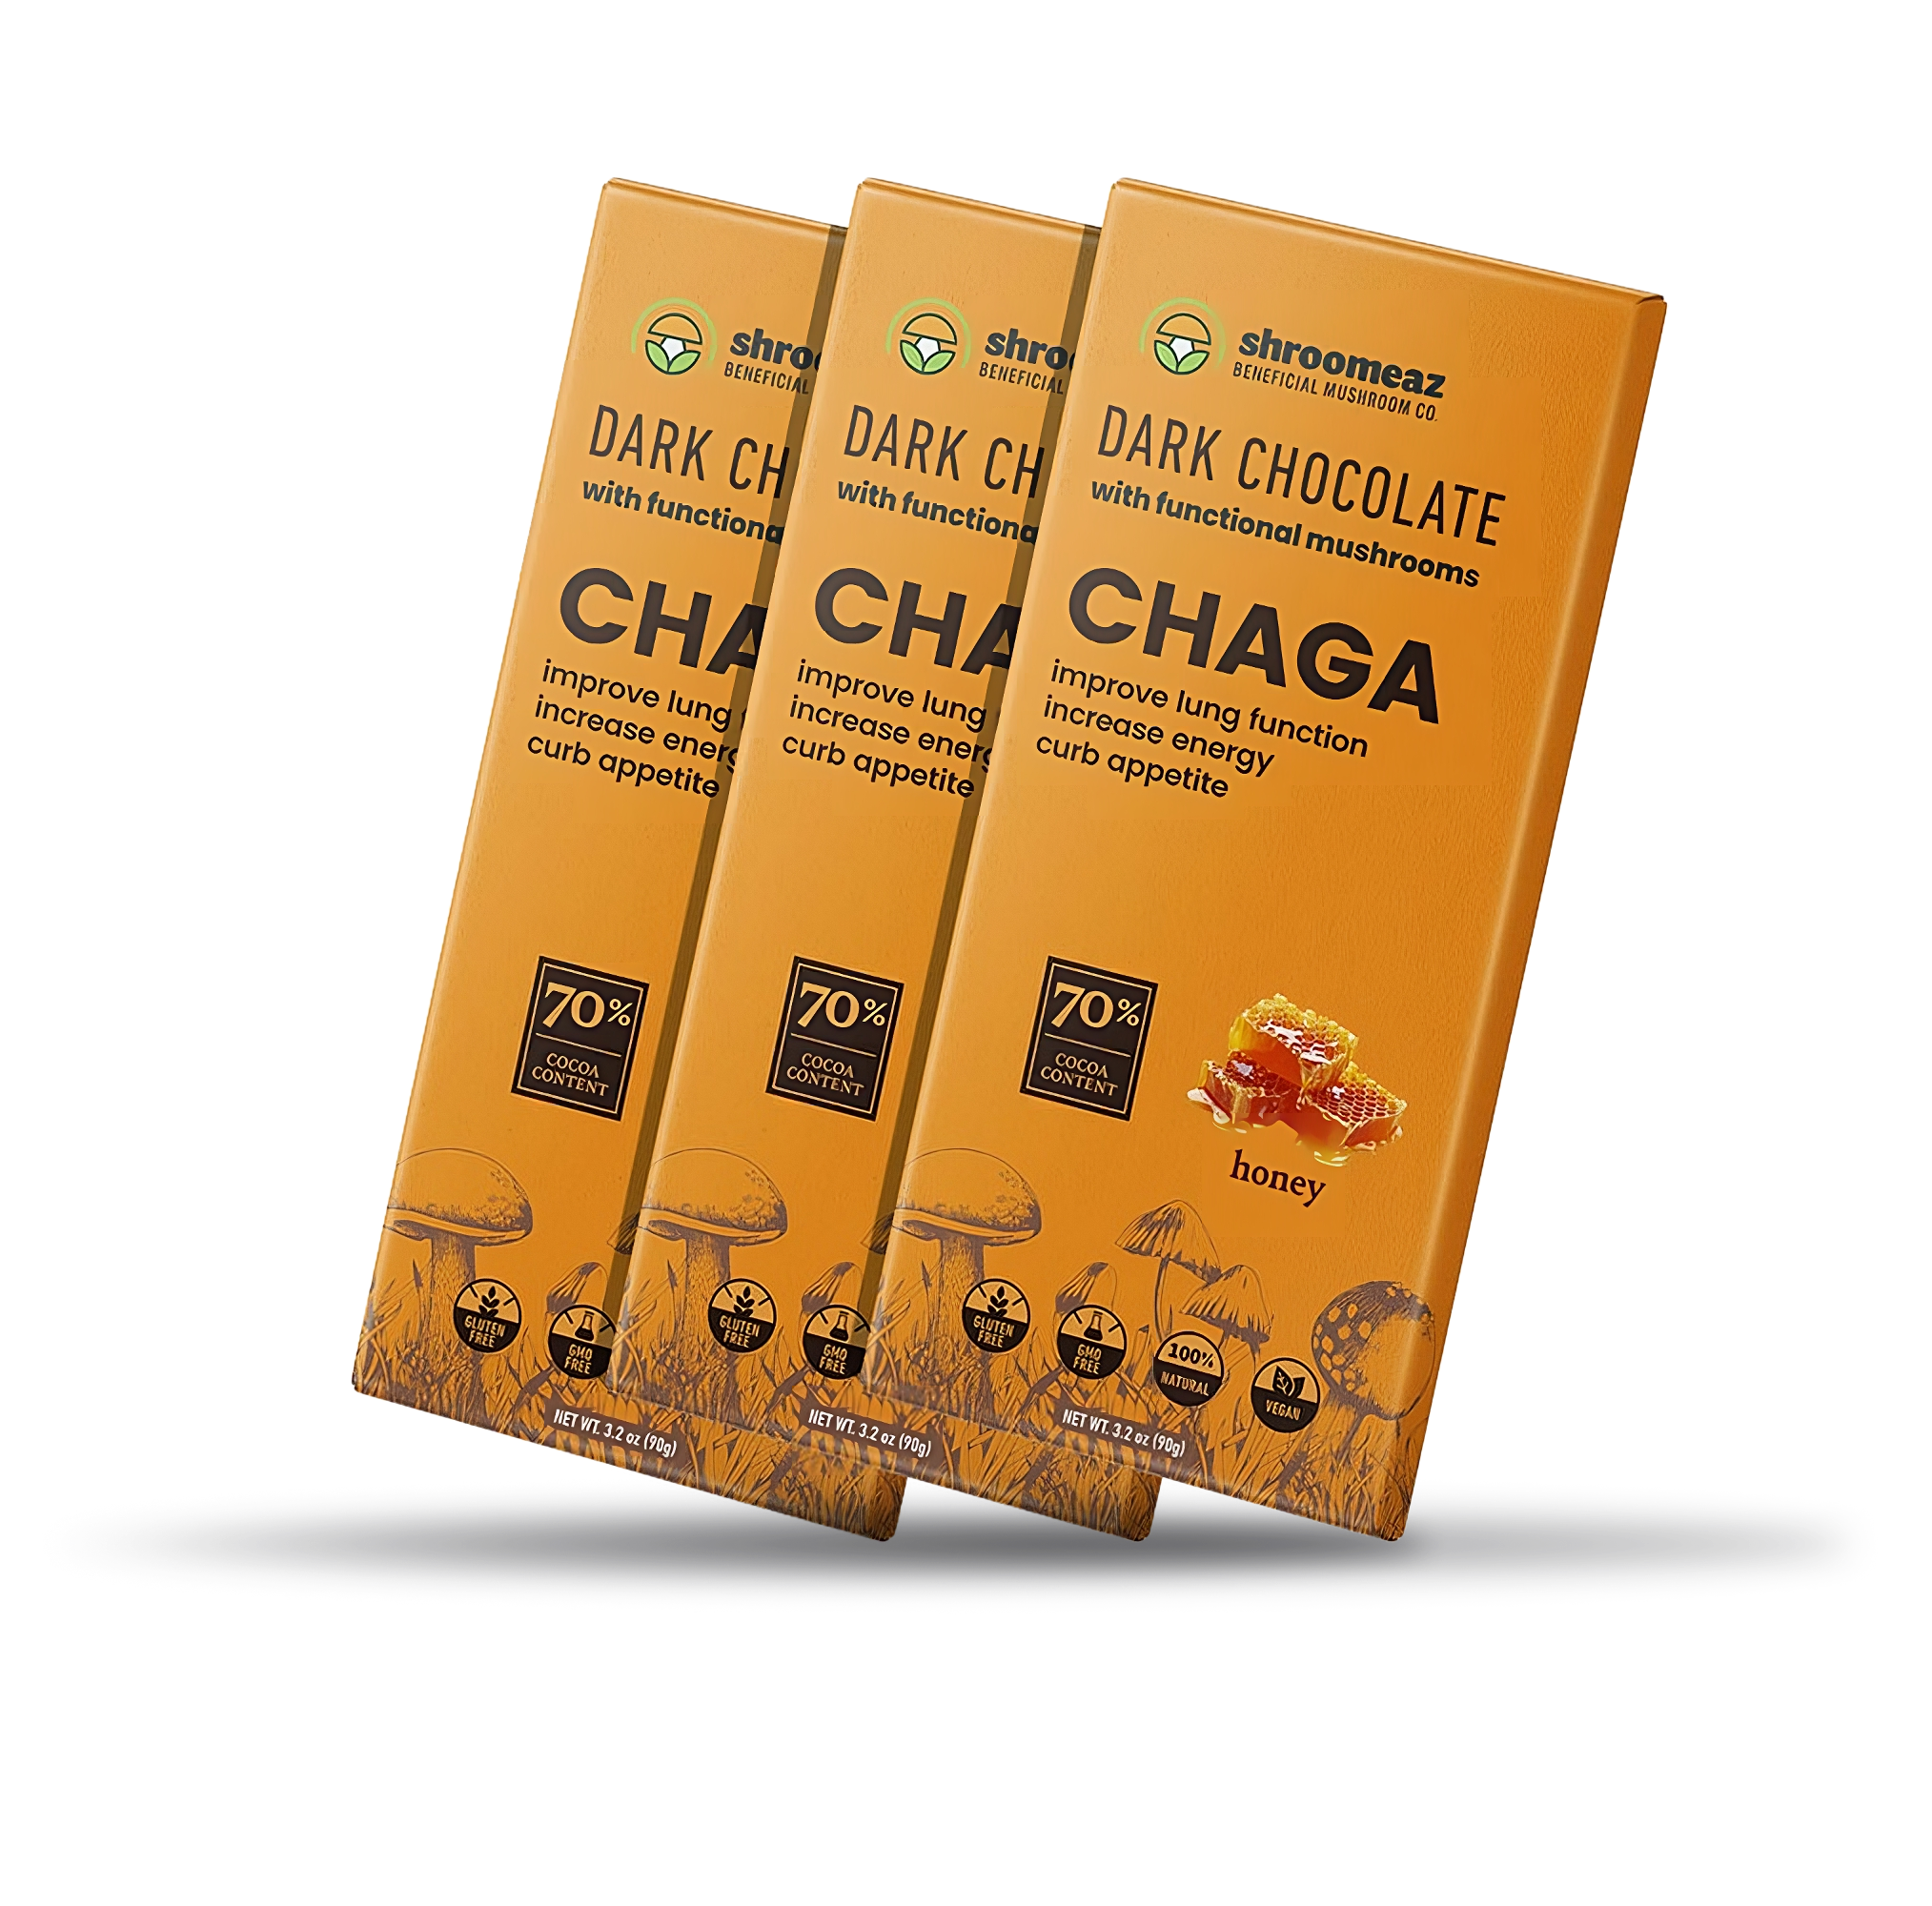 Shroomeaz Functional Mushroom Chocolate Bar with Chaga - Vegan - 70% Dark Chocolate - Only 3g of Added Sugar, 3 Count